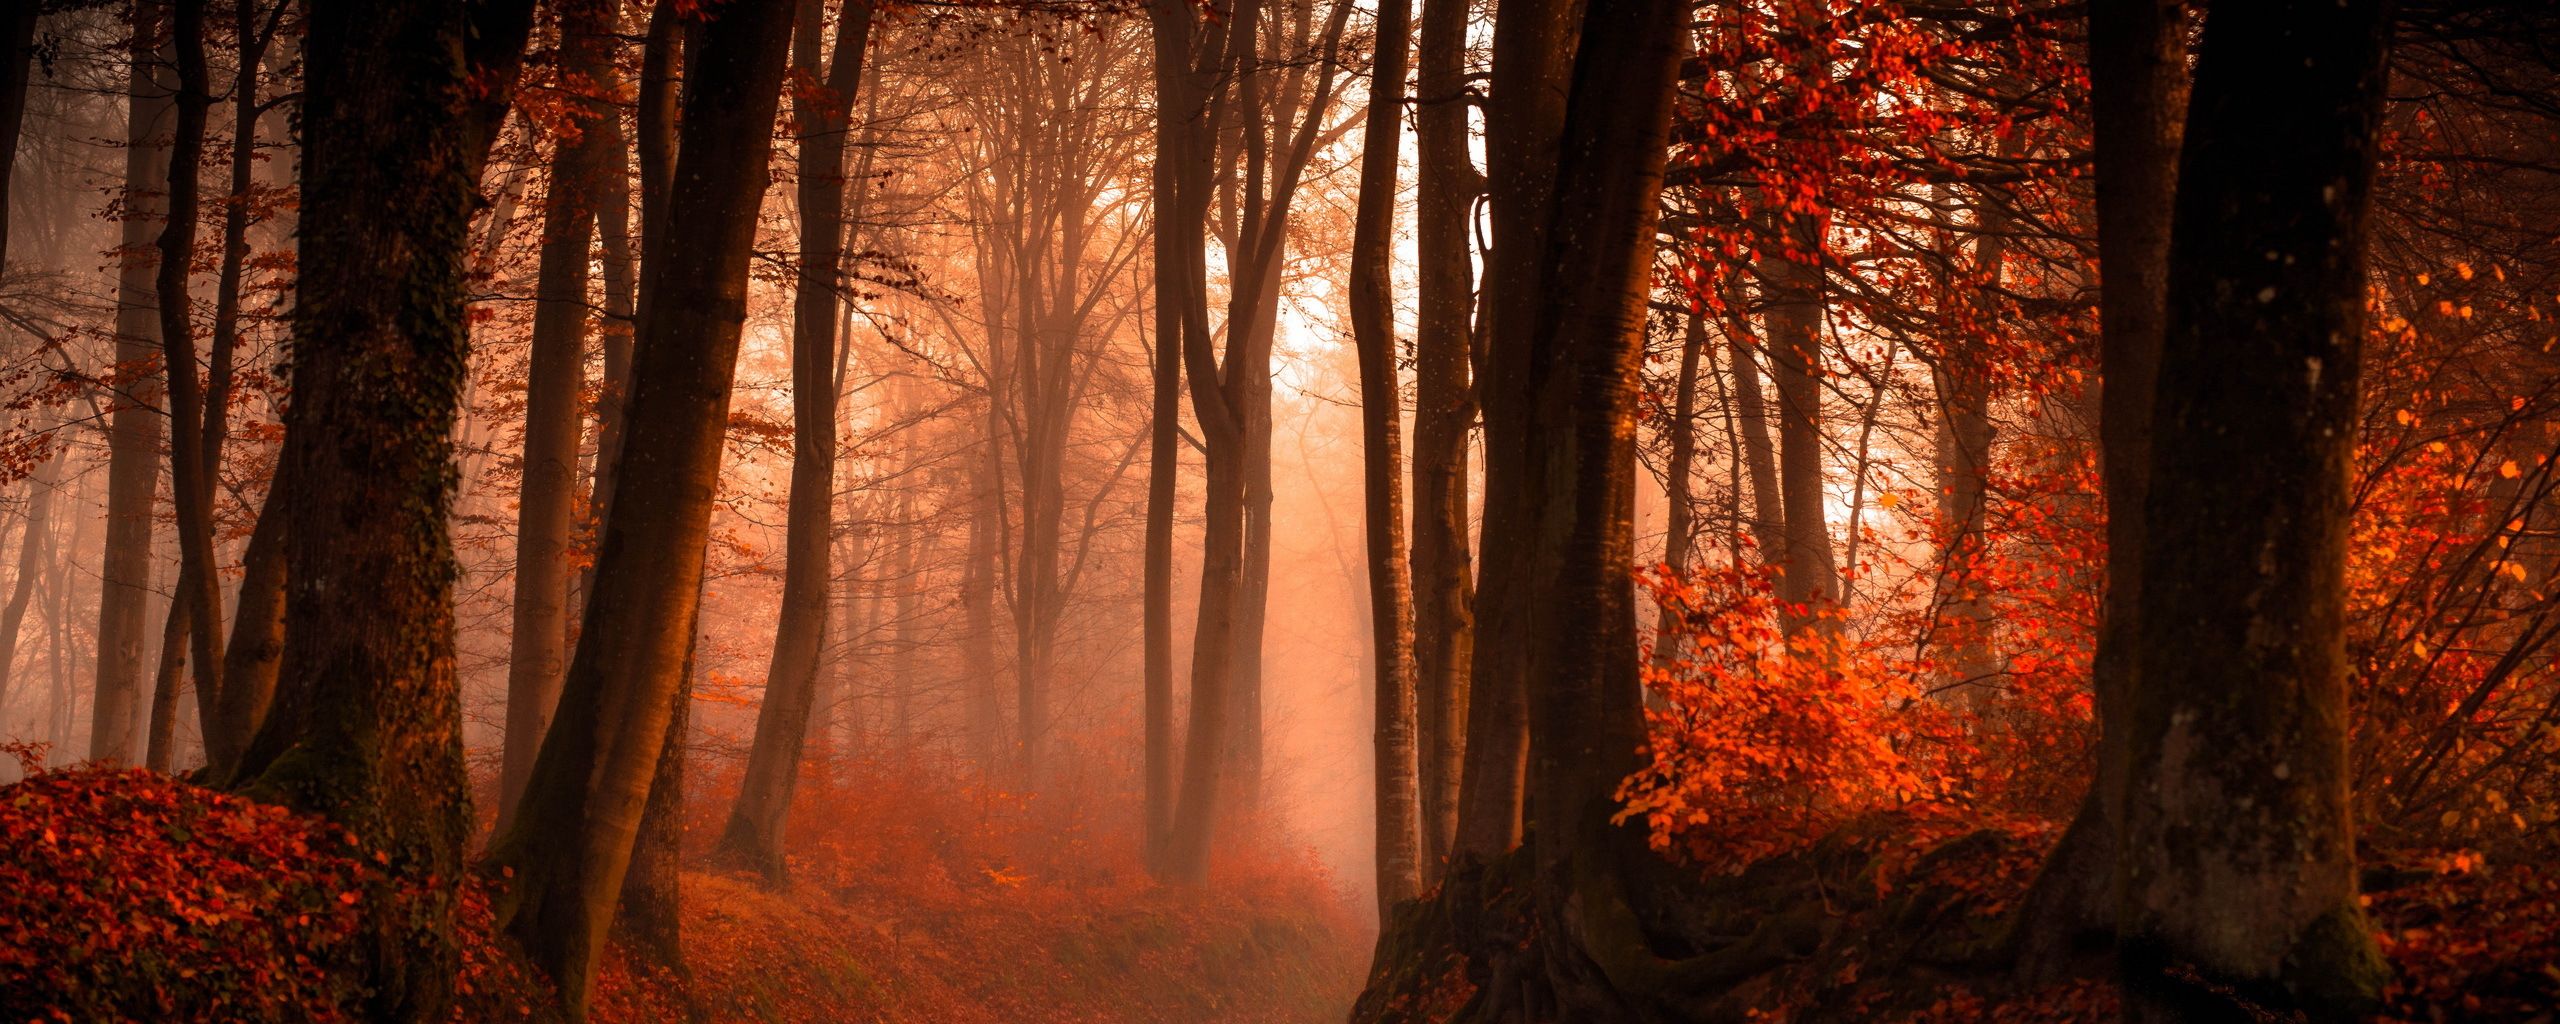 Desktop Wallpaper Red Forest In Autumn, HD Image, Picture, Background, Wm1koz